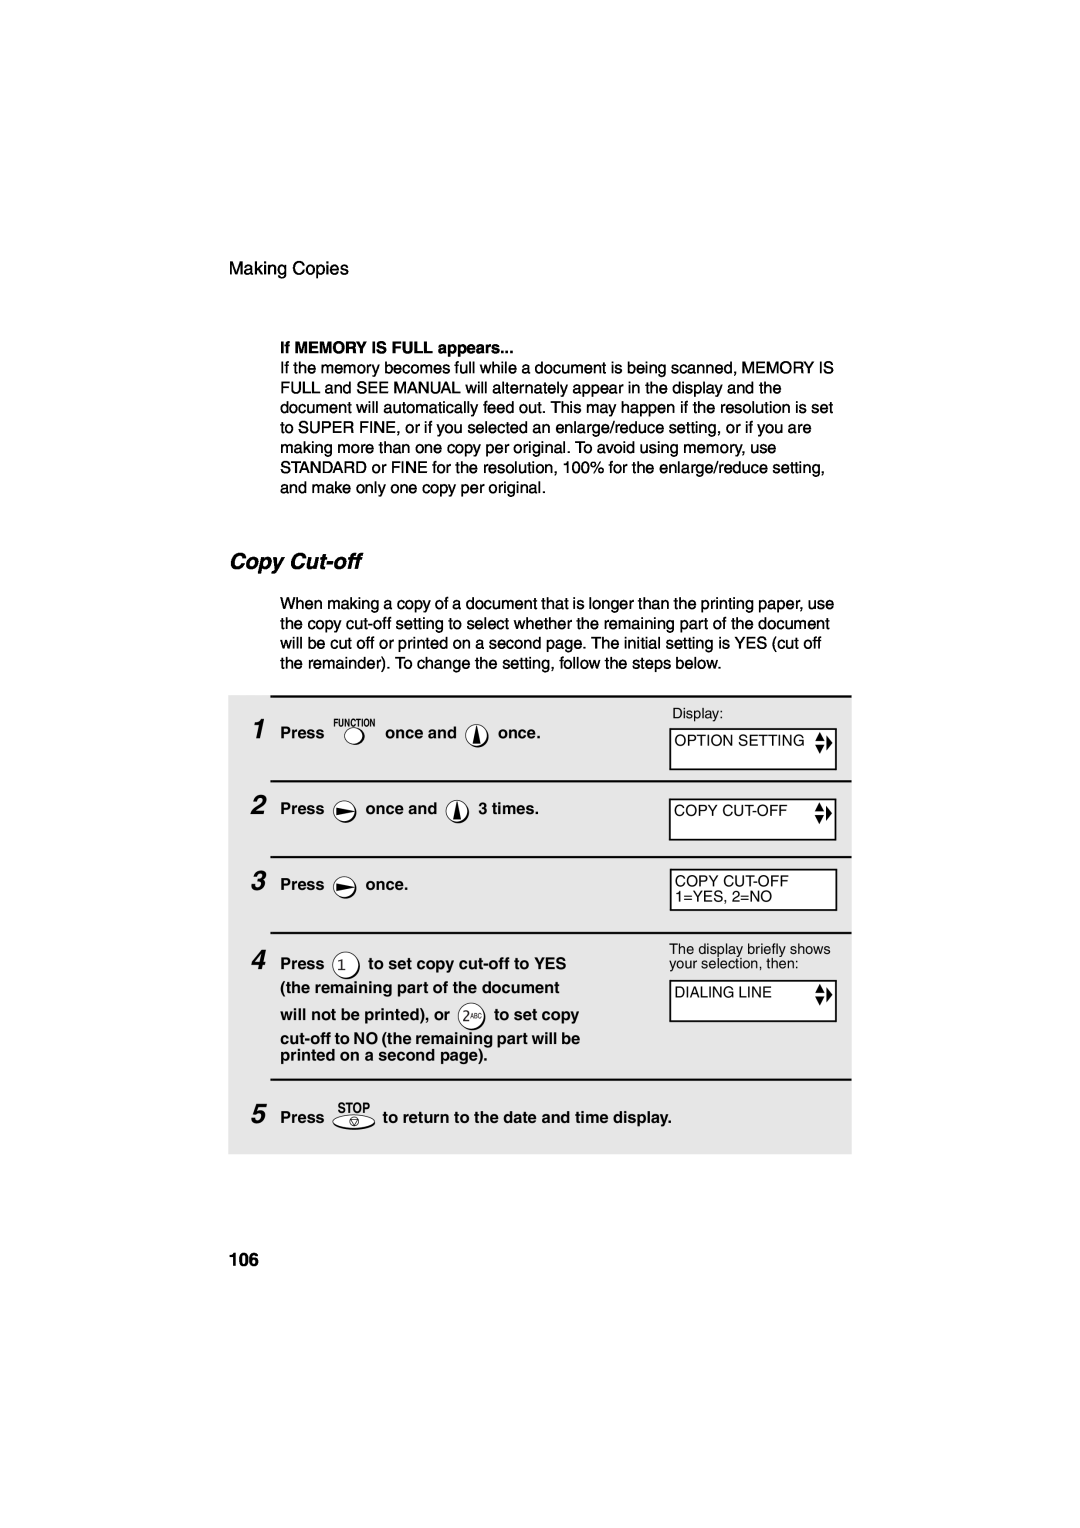 Sharp UX-CD600 operation manual Copy Cut-off, Making Copies 